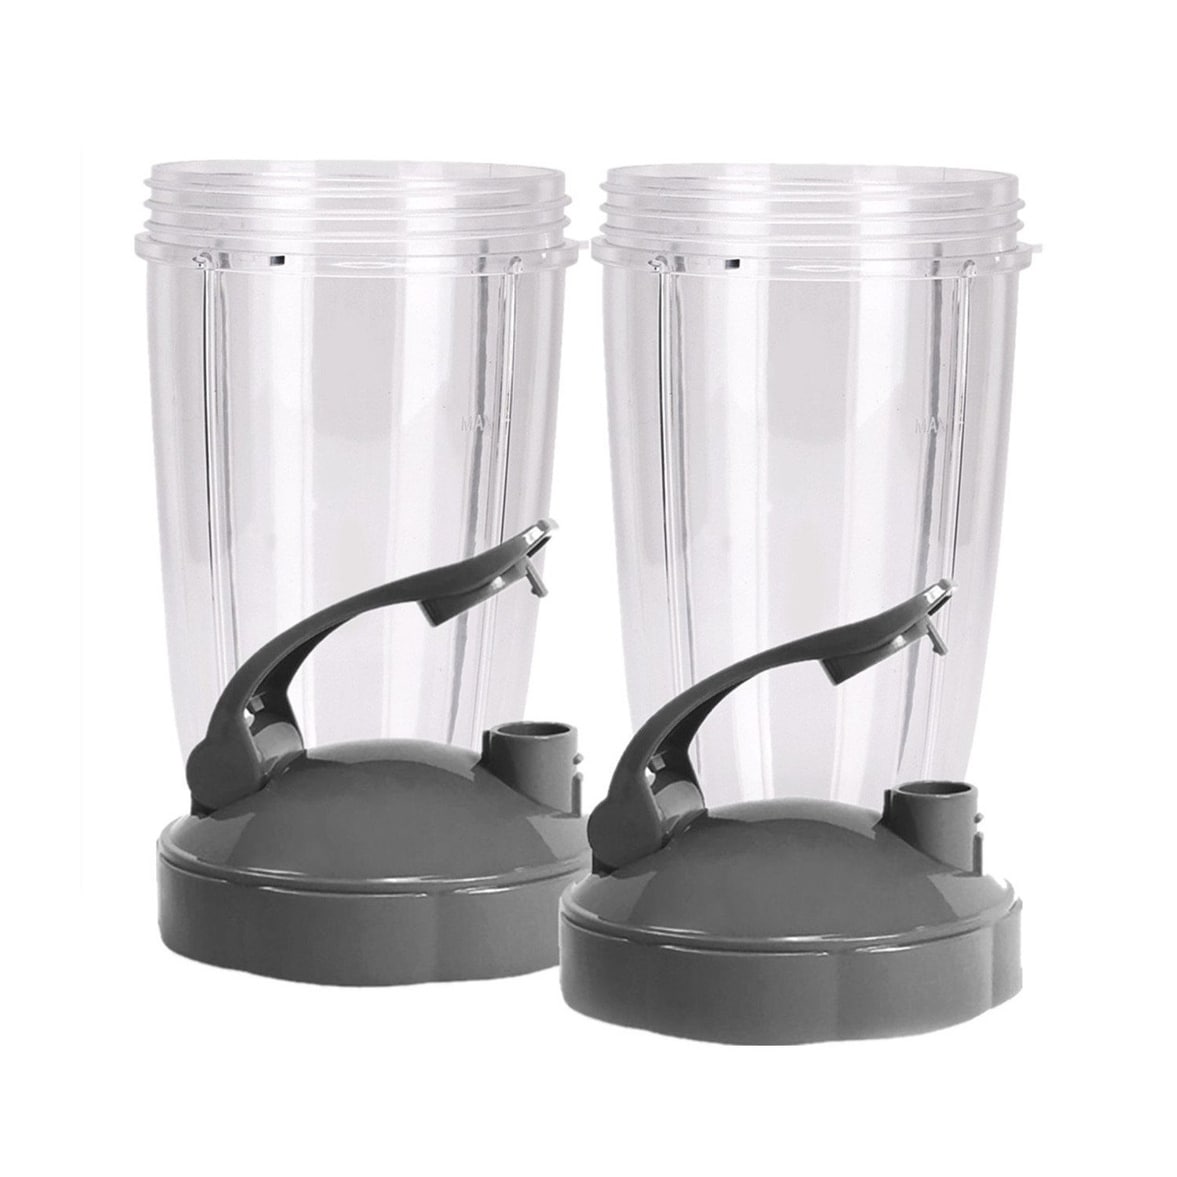 Blendin 2 Pack Replacement 16oz Tall Jar Cups,Fits Original Magic